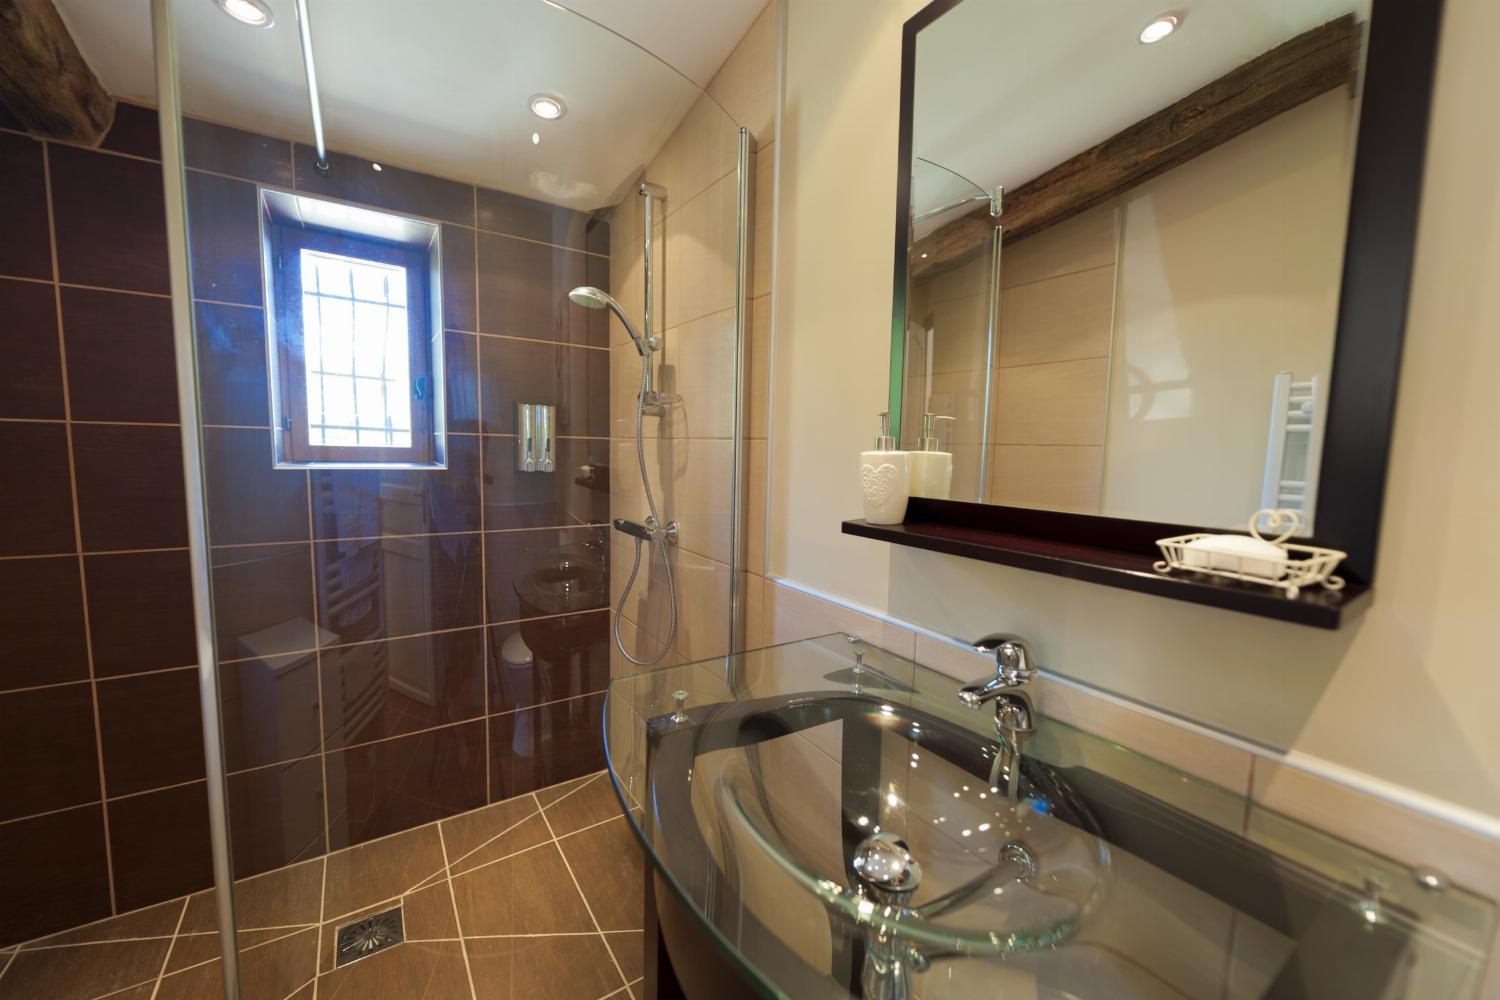 Bathroom | Rental home in Nouvelle-Aquitaine